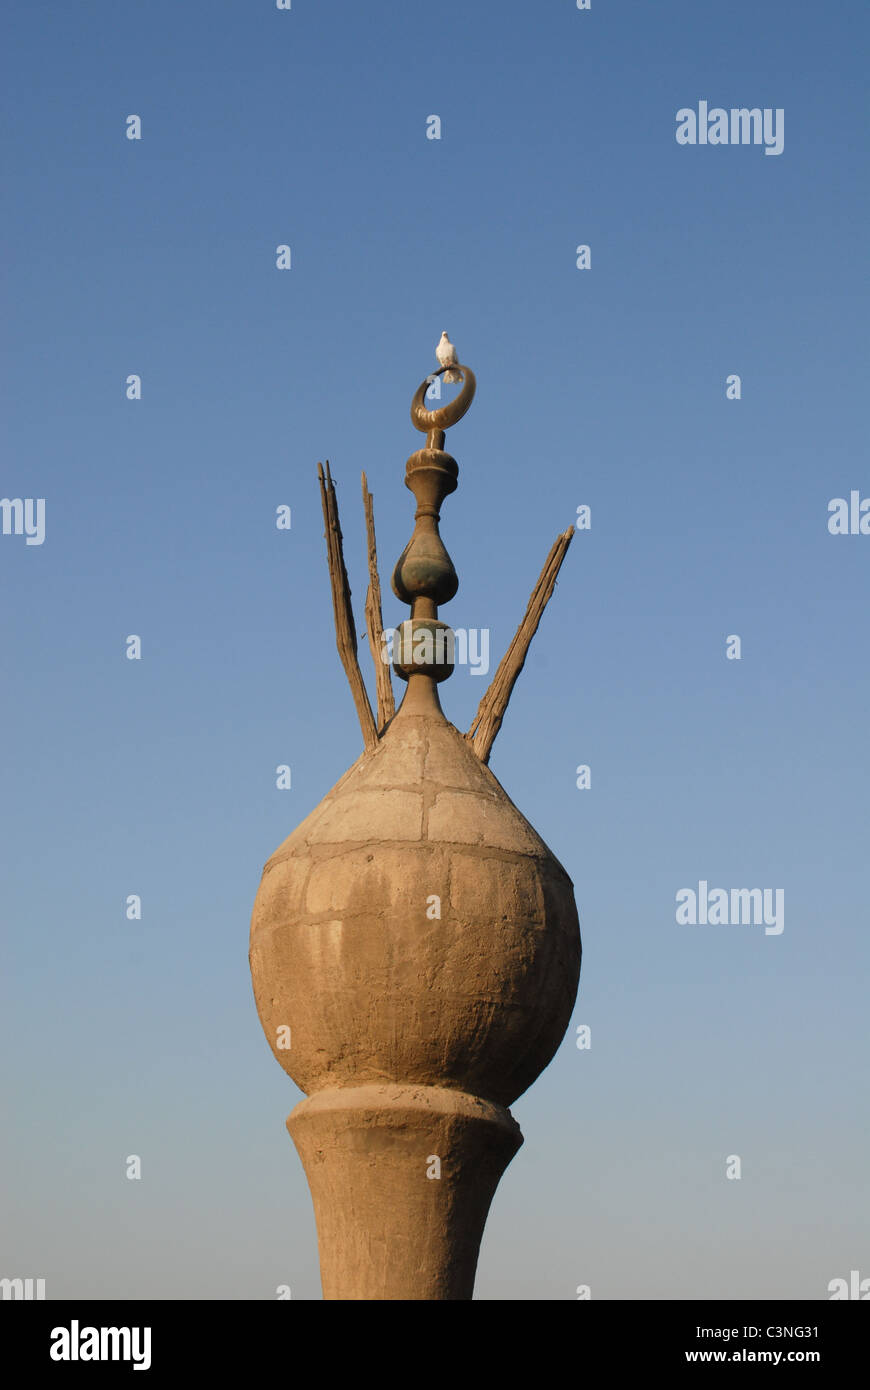 Cairo, Egypt -- The top of a minaret in the Sayeda Aisha neighborhood of Cairo. Stock Photo